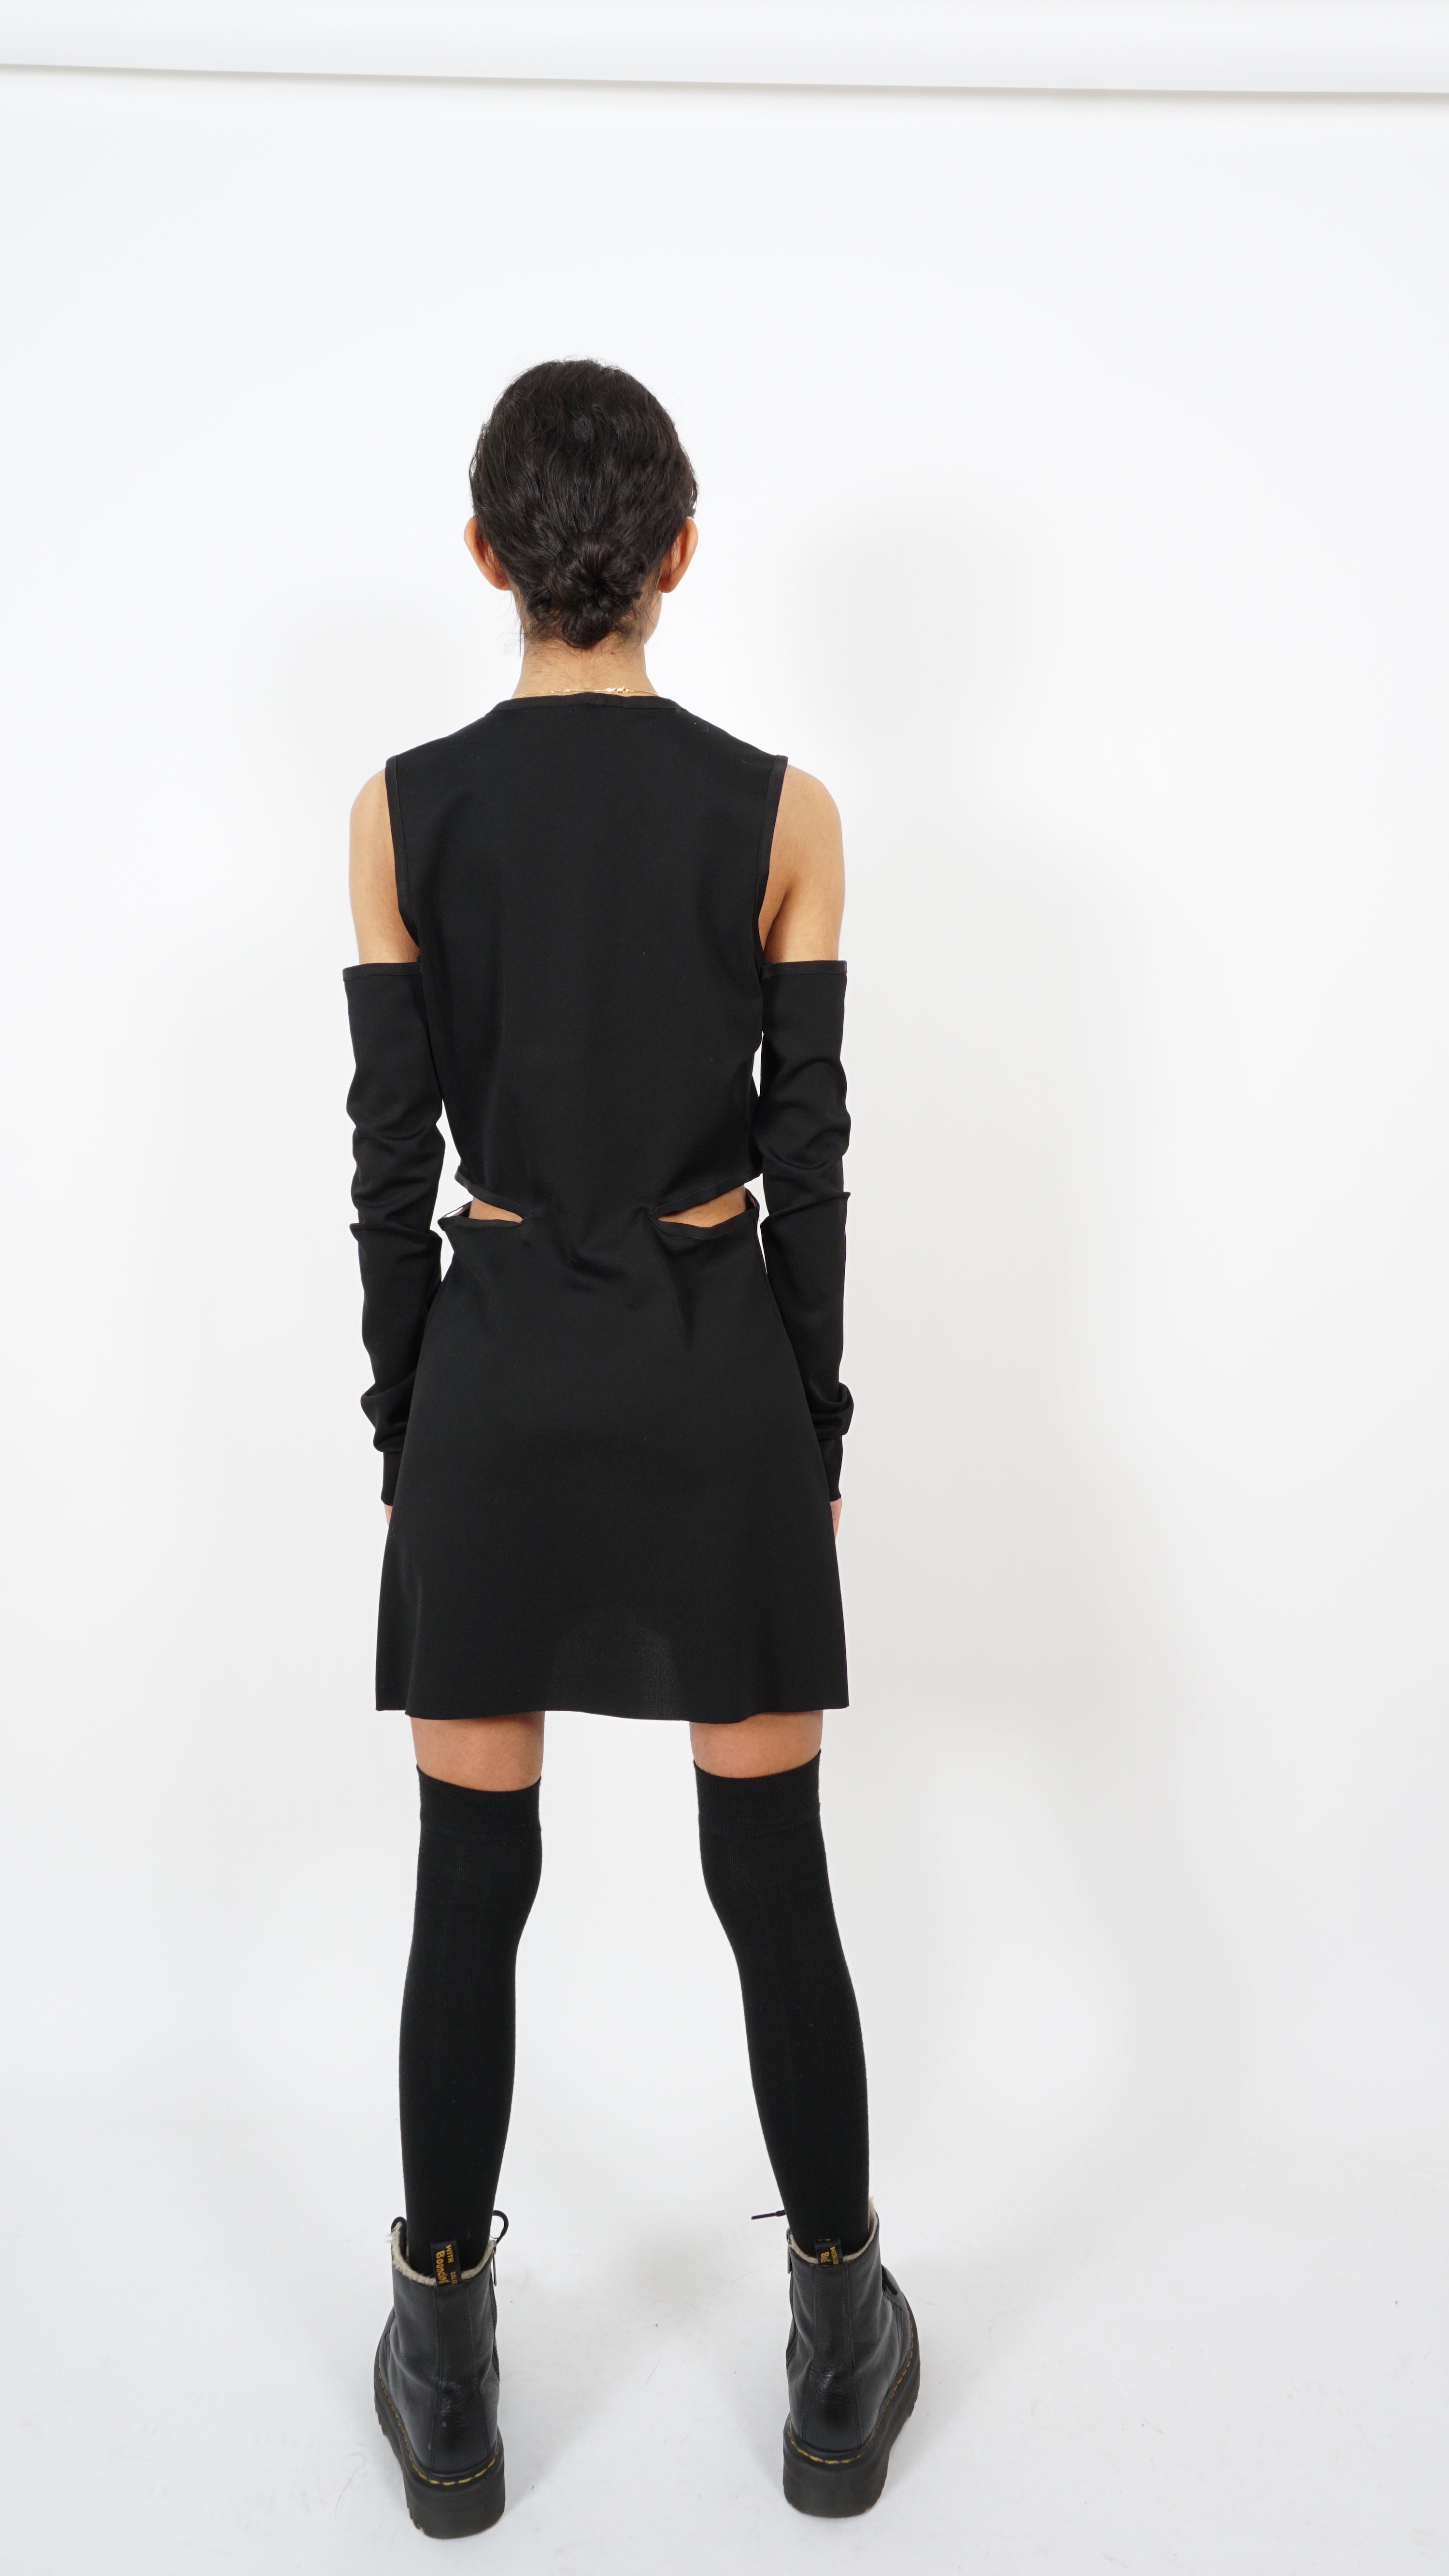 Gap dress by Sabine Poupinel